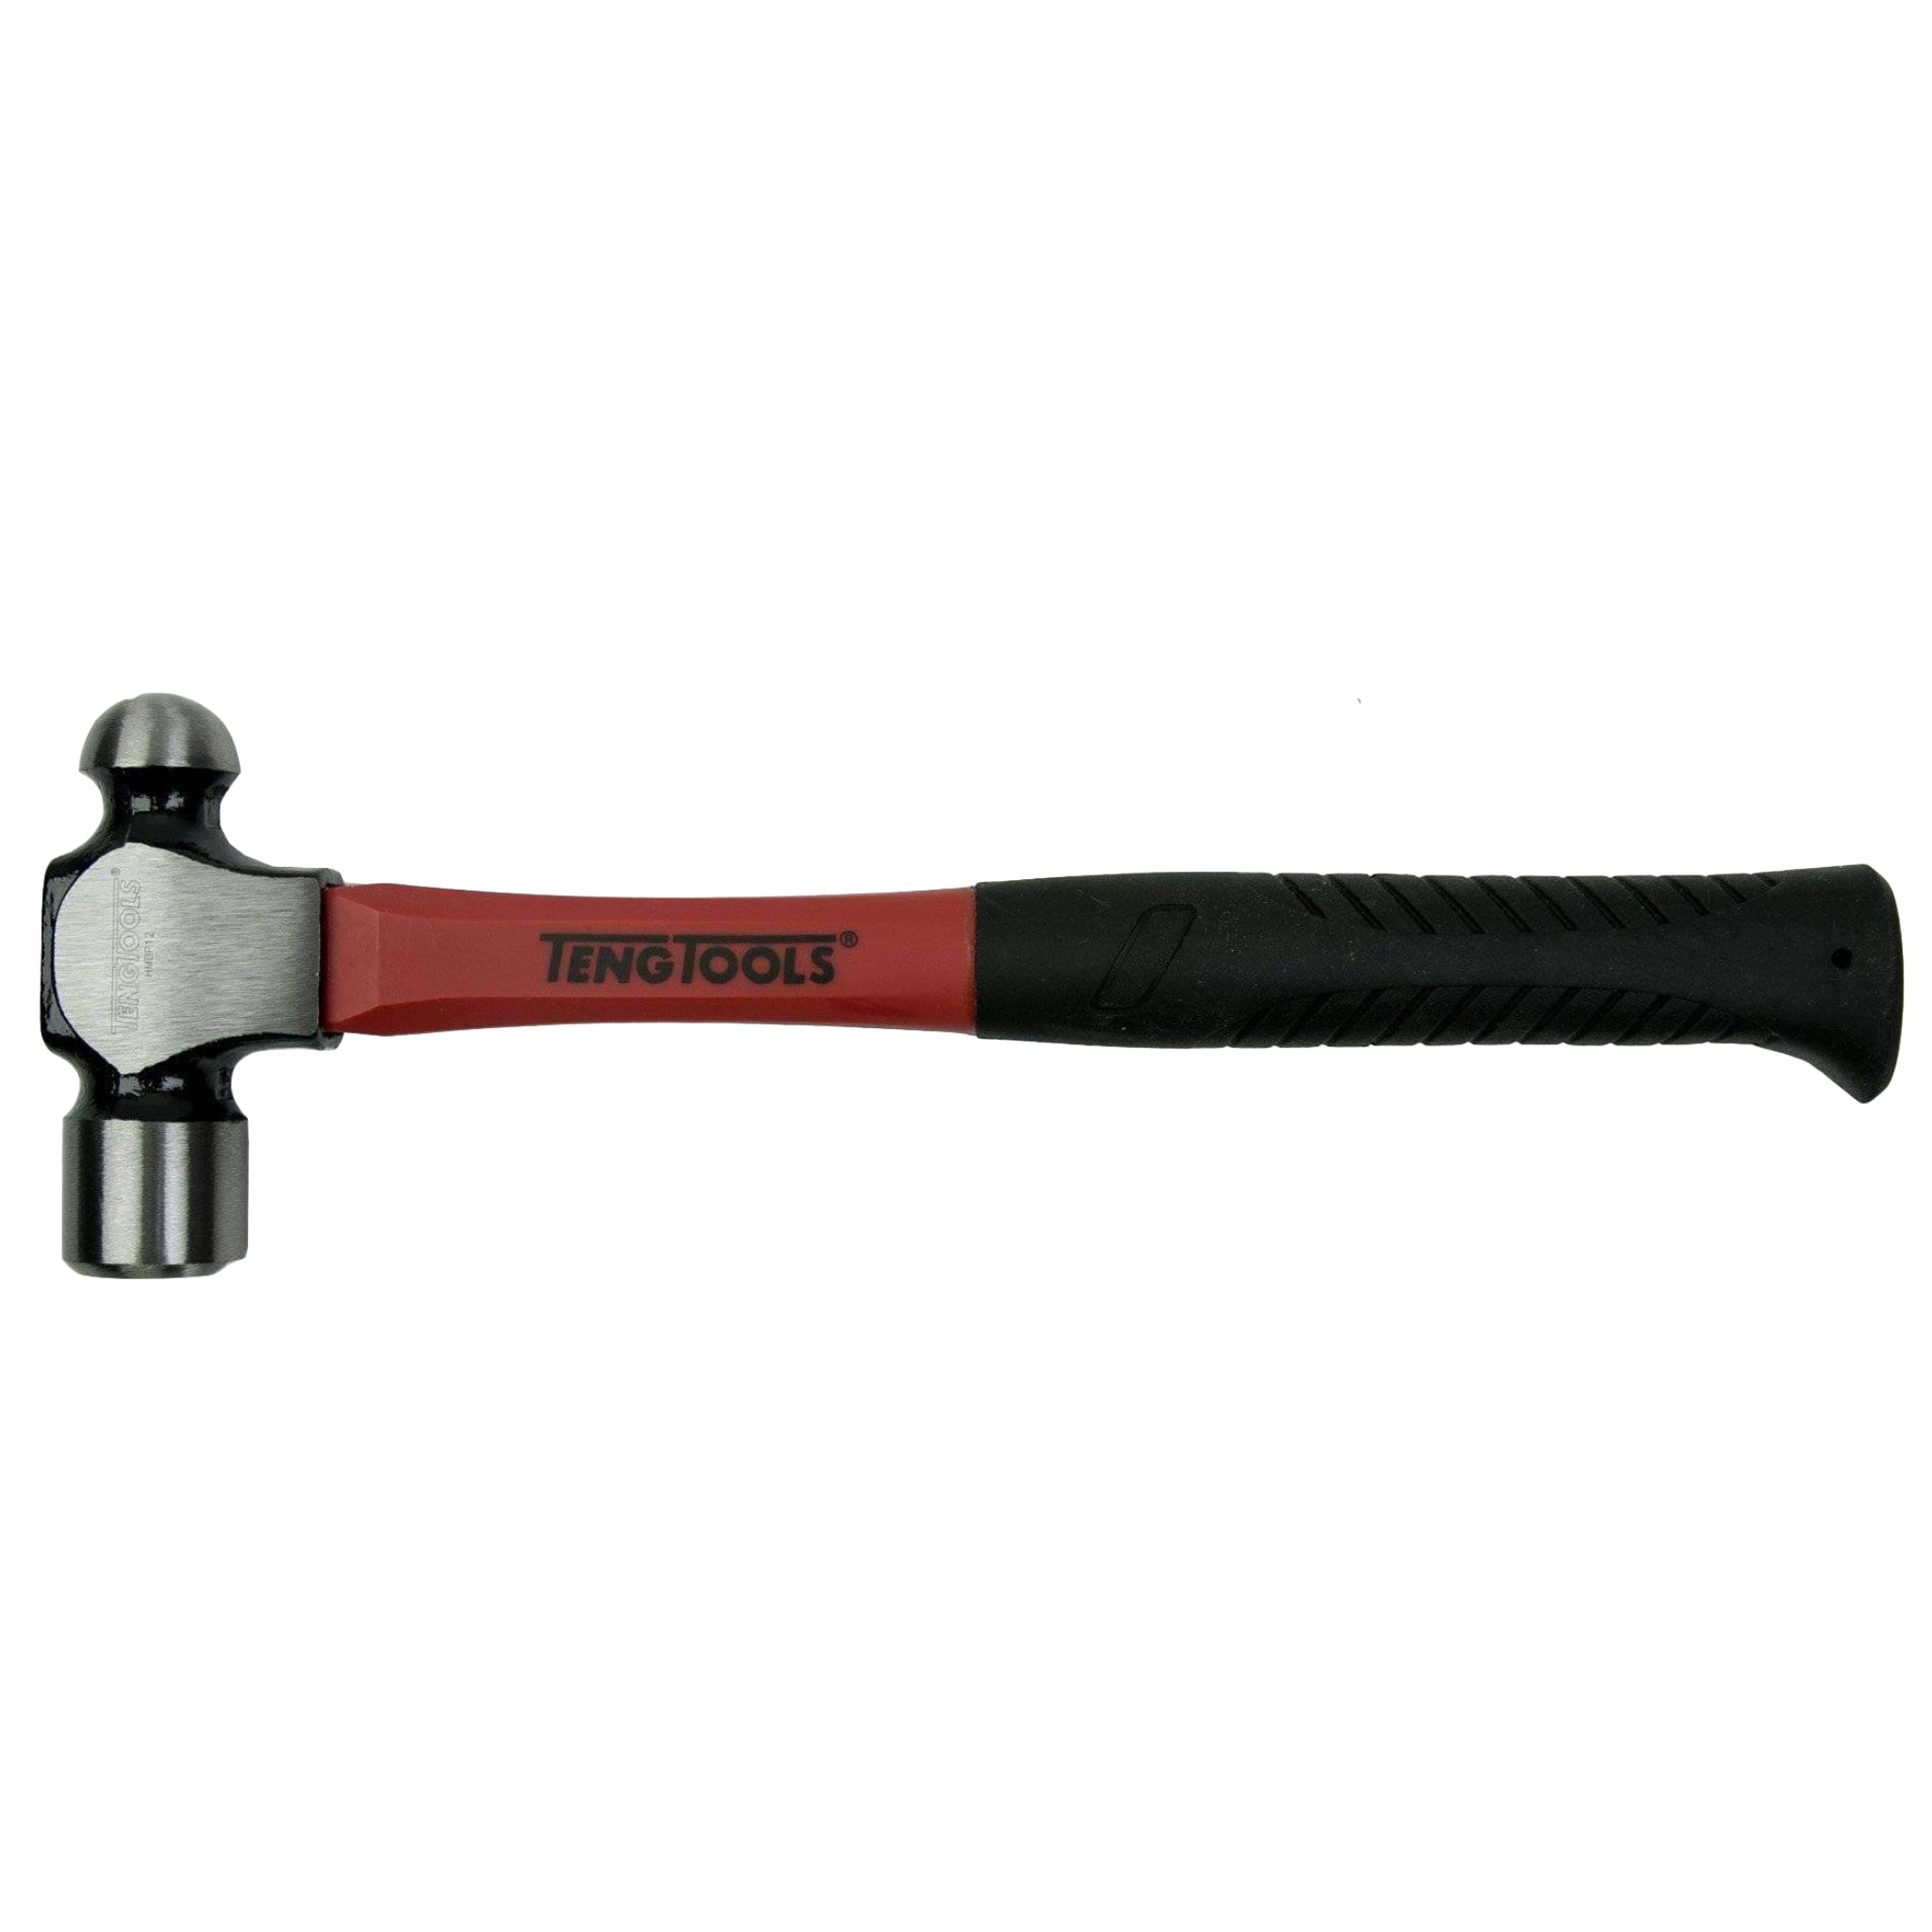 Teng Tools Ball Pein Hammer Range 12, 16, 24 And 32 Ounce (Oz) Hammers - 12 Oz